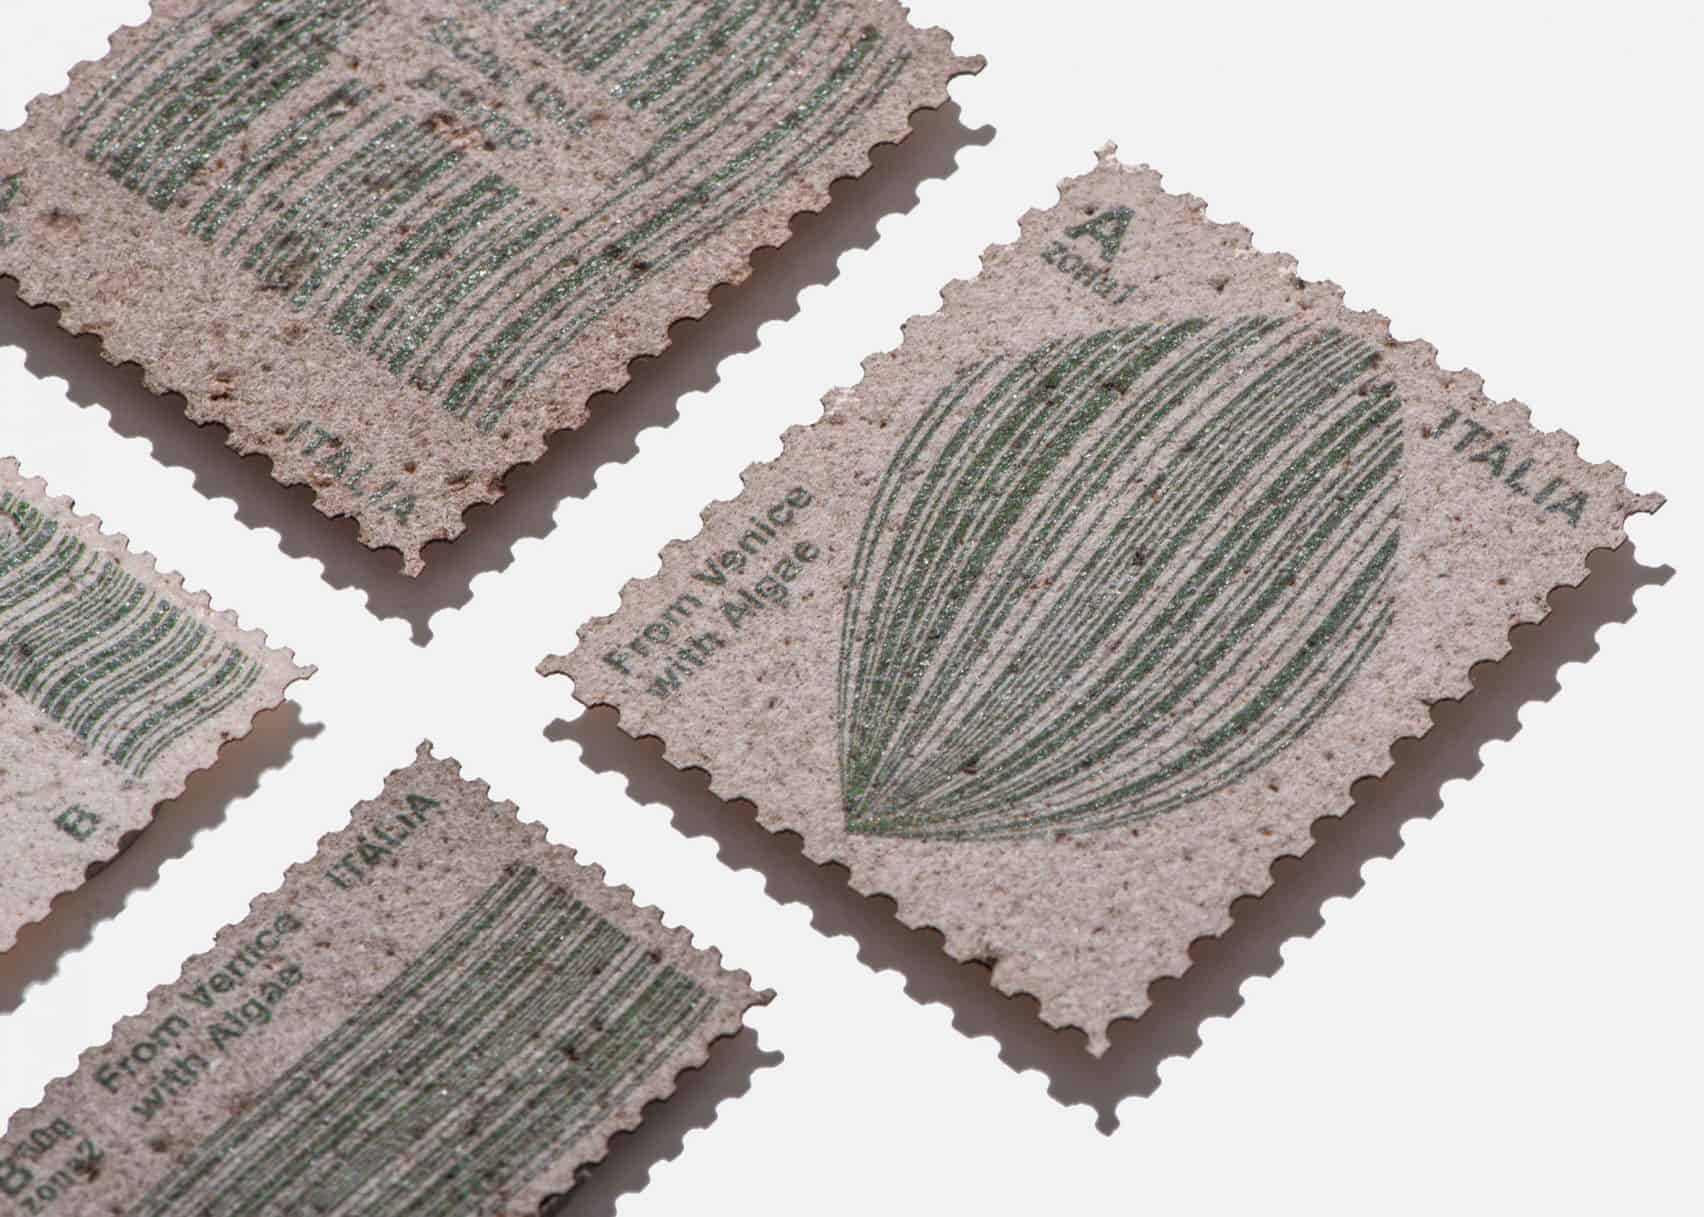 Bigfoottraveller.com｜明信片上的邮票，是威尼斯水藻制成的